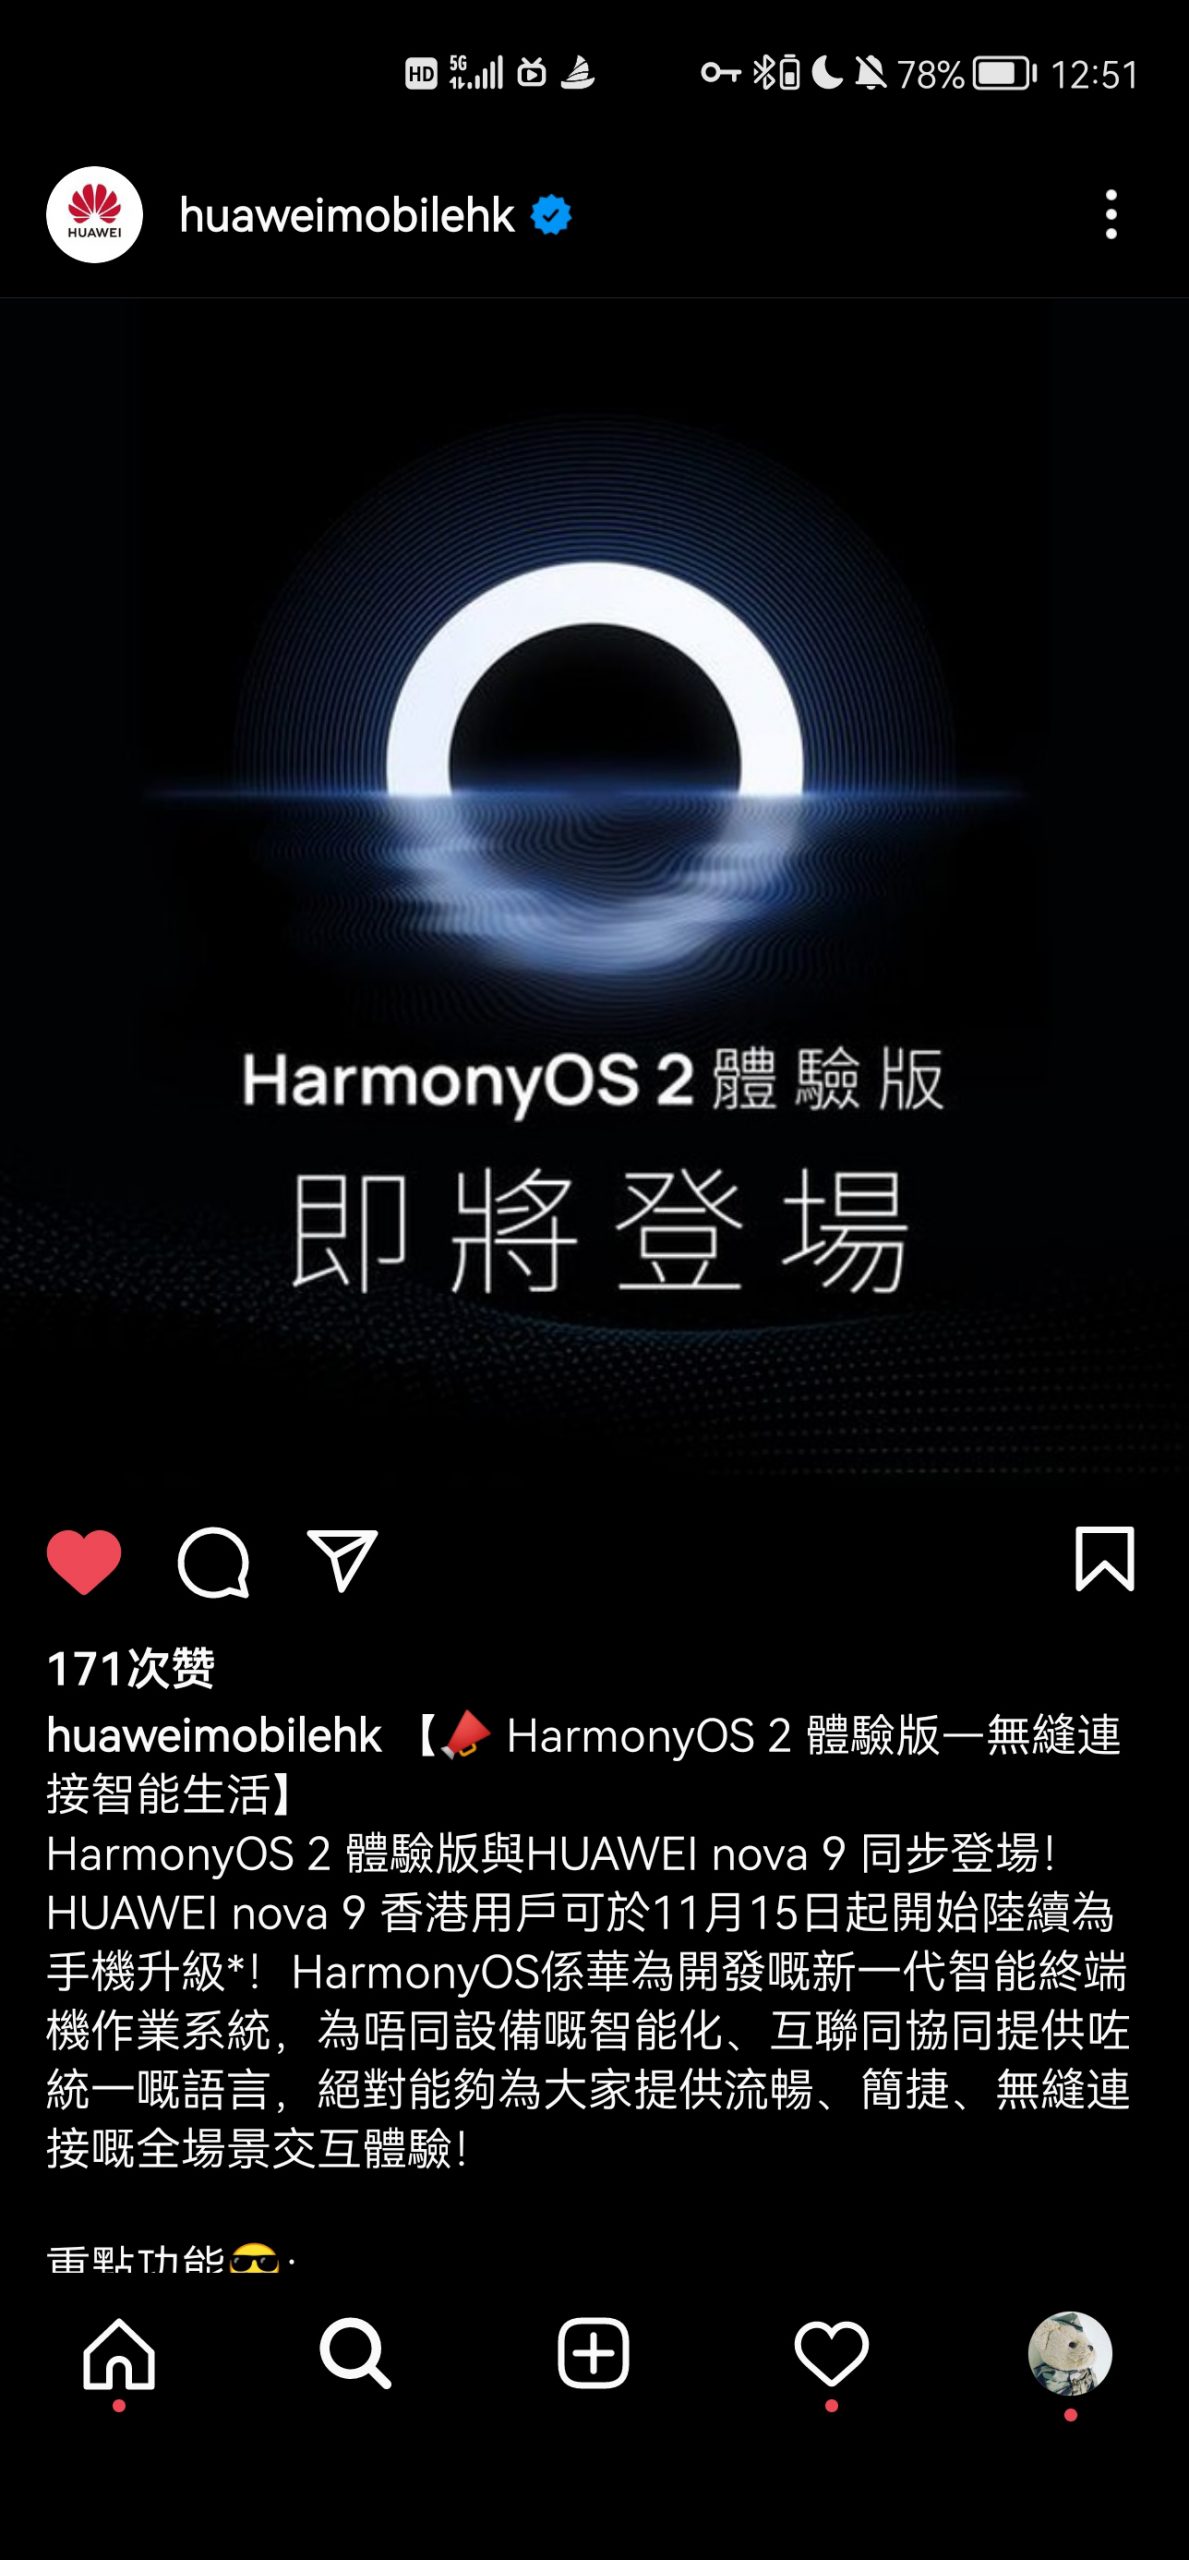 Huawei Nova 9 Hong Kong variant will get HarmonyOS beta